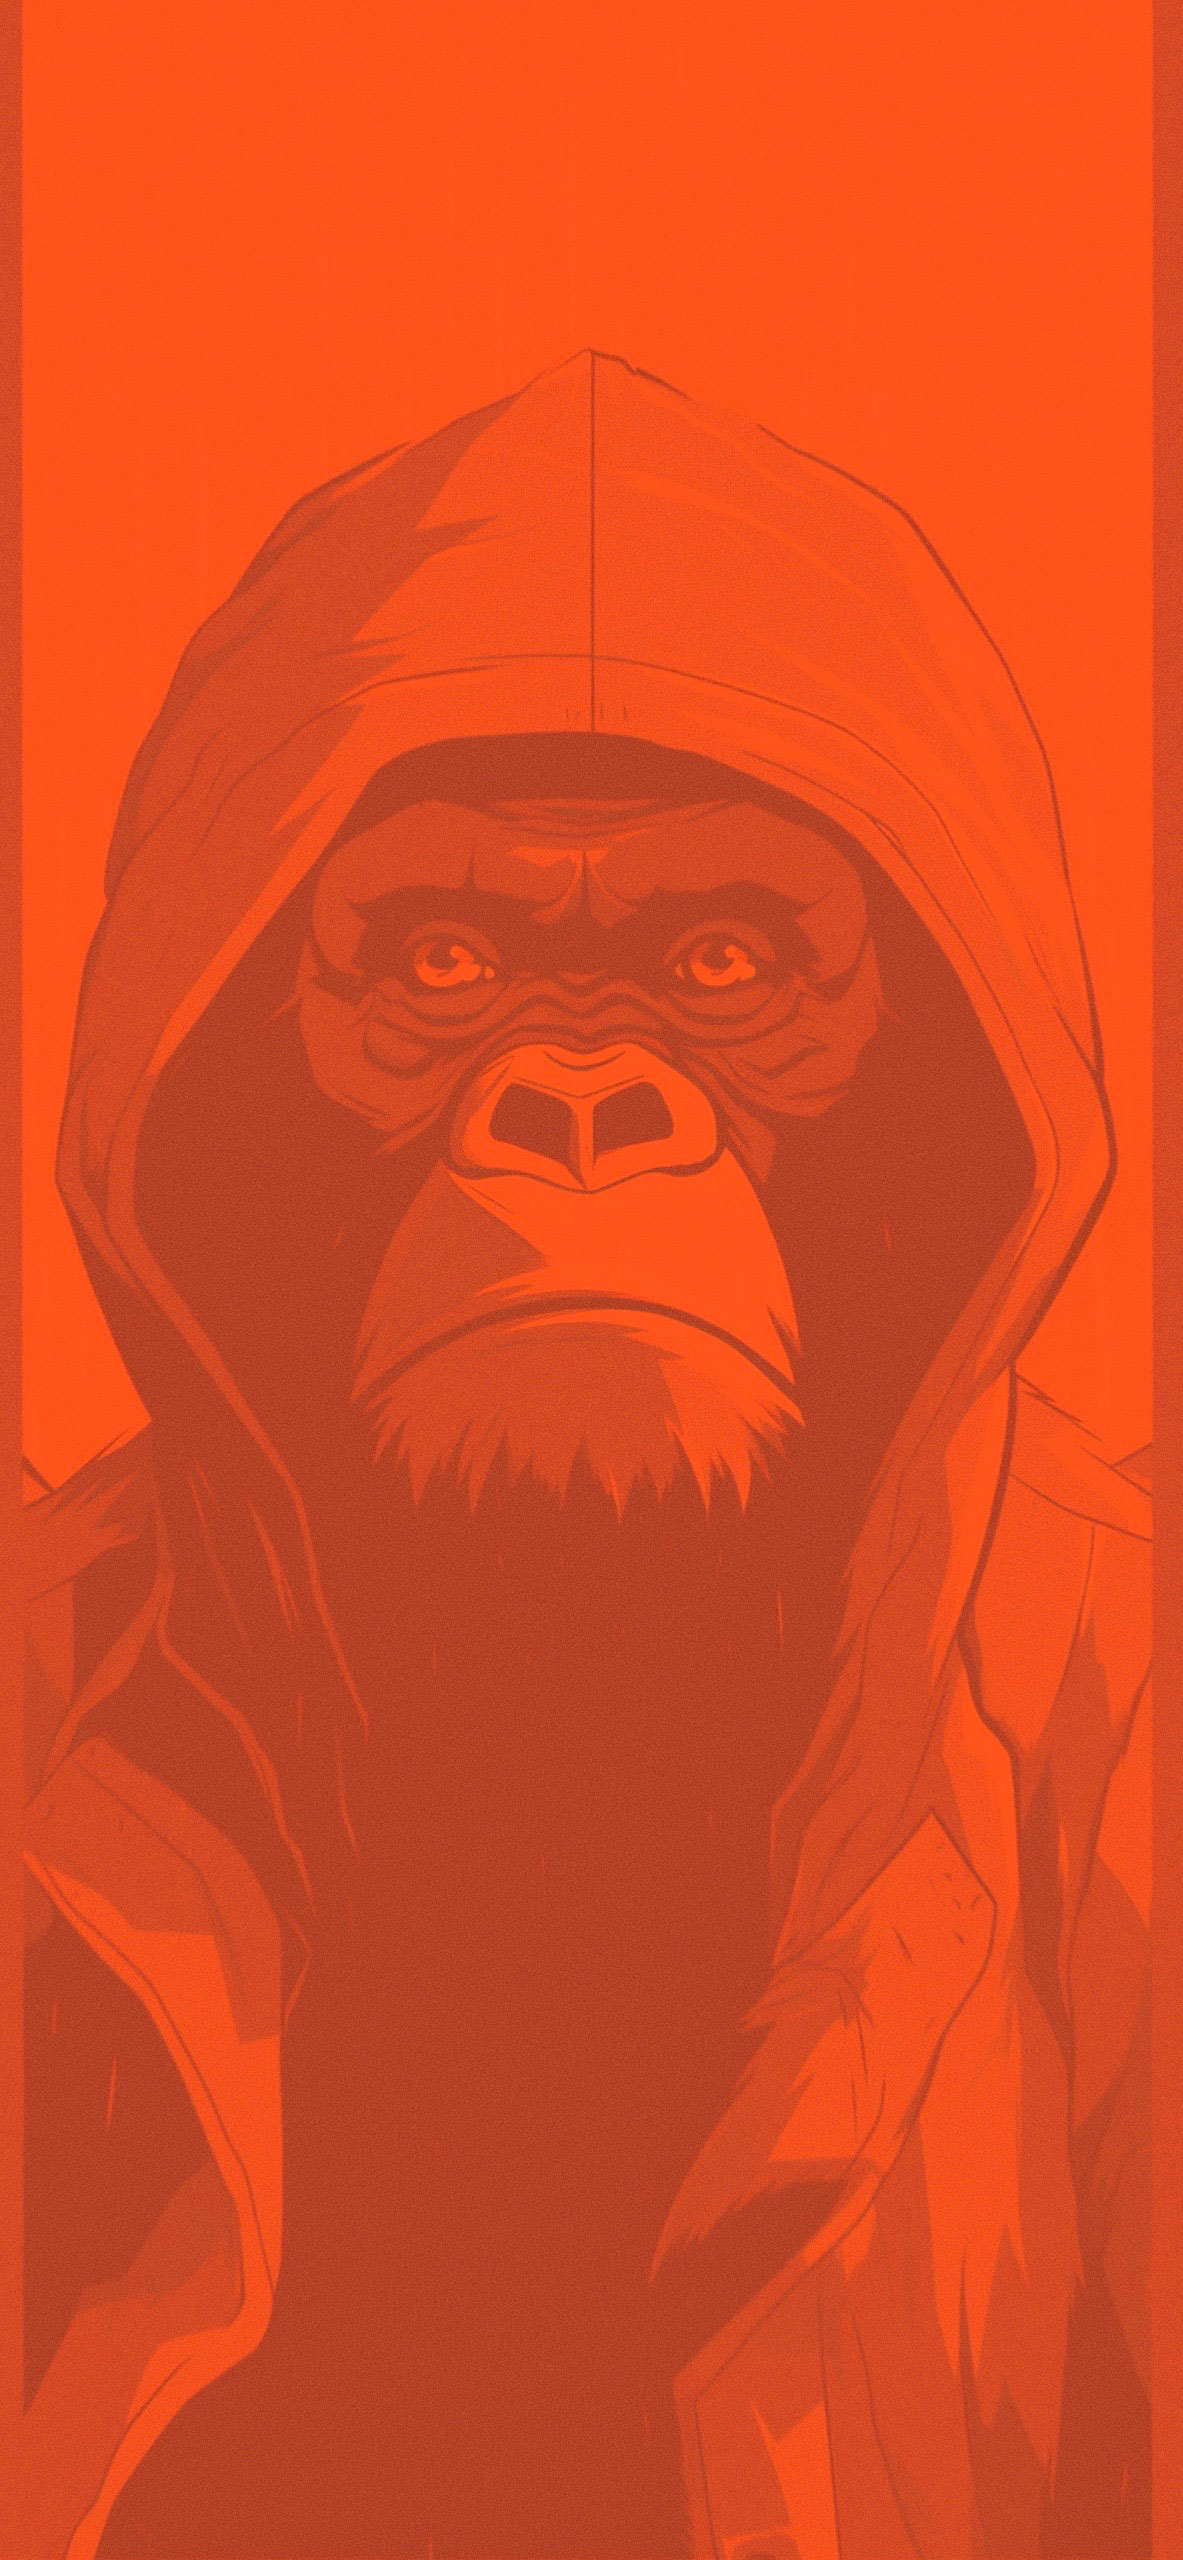 ape in the hood orange background